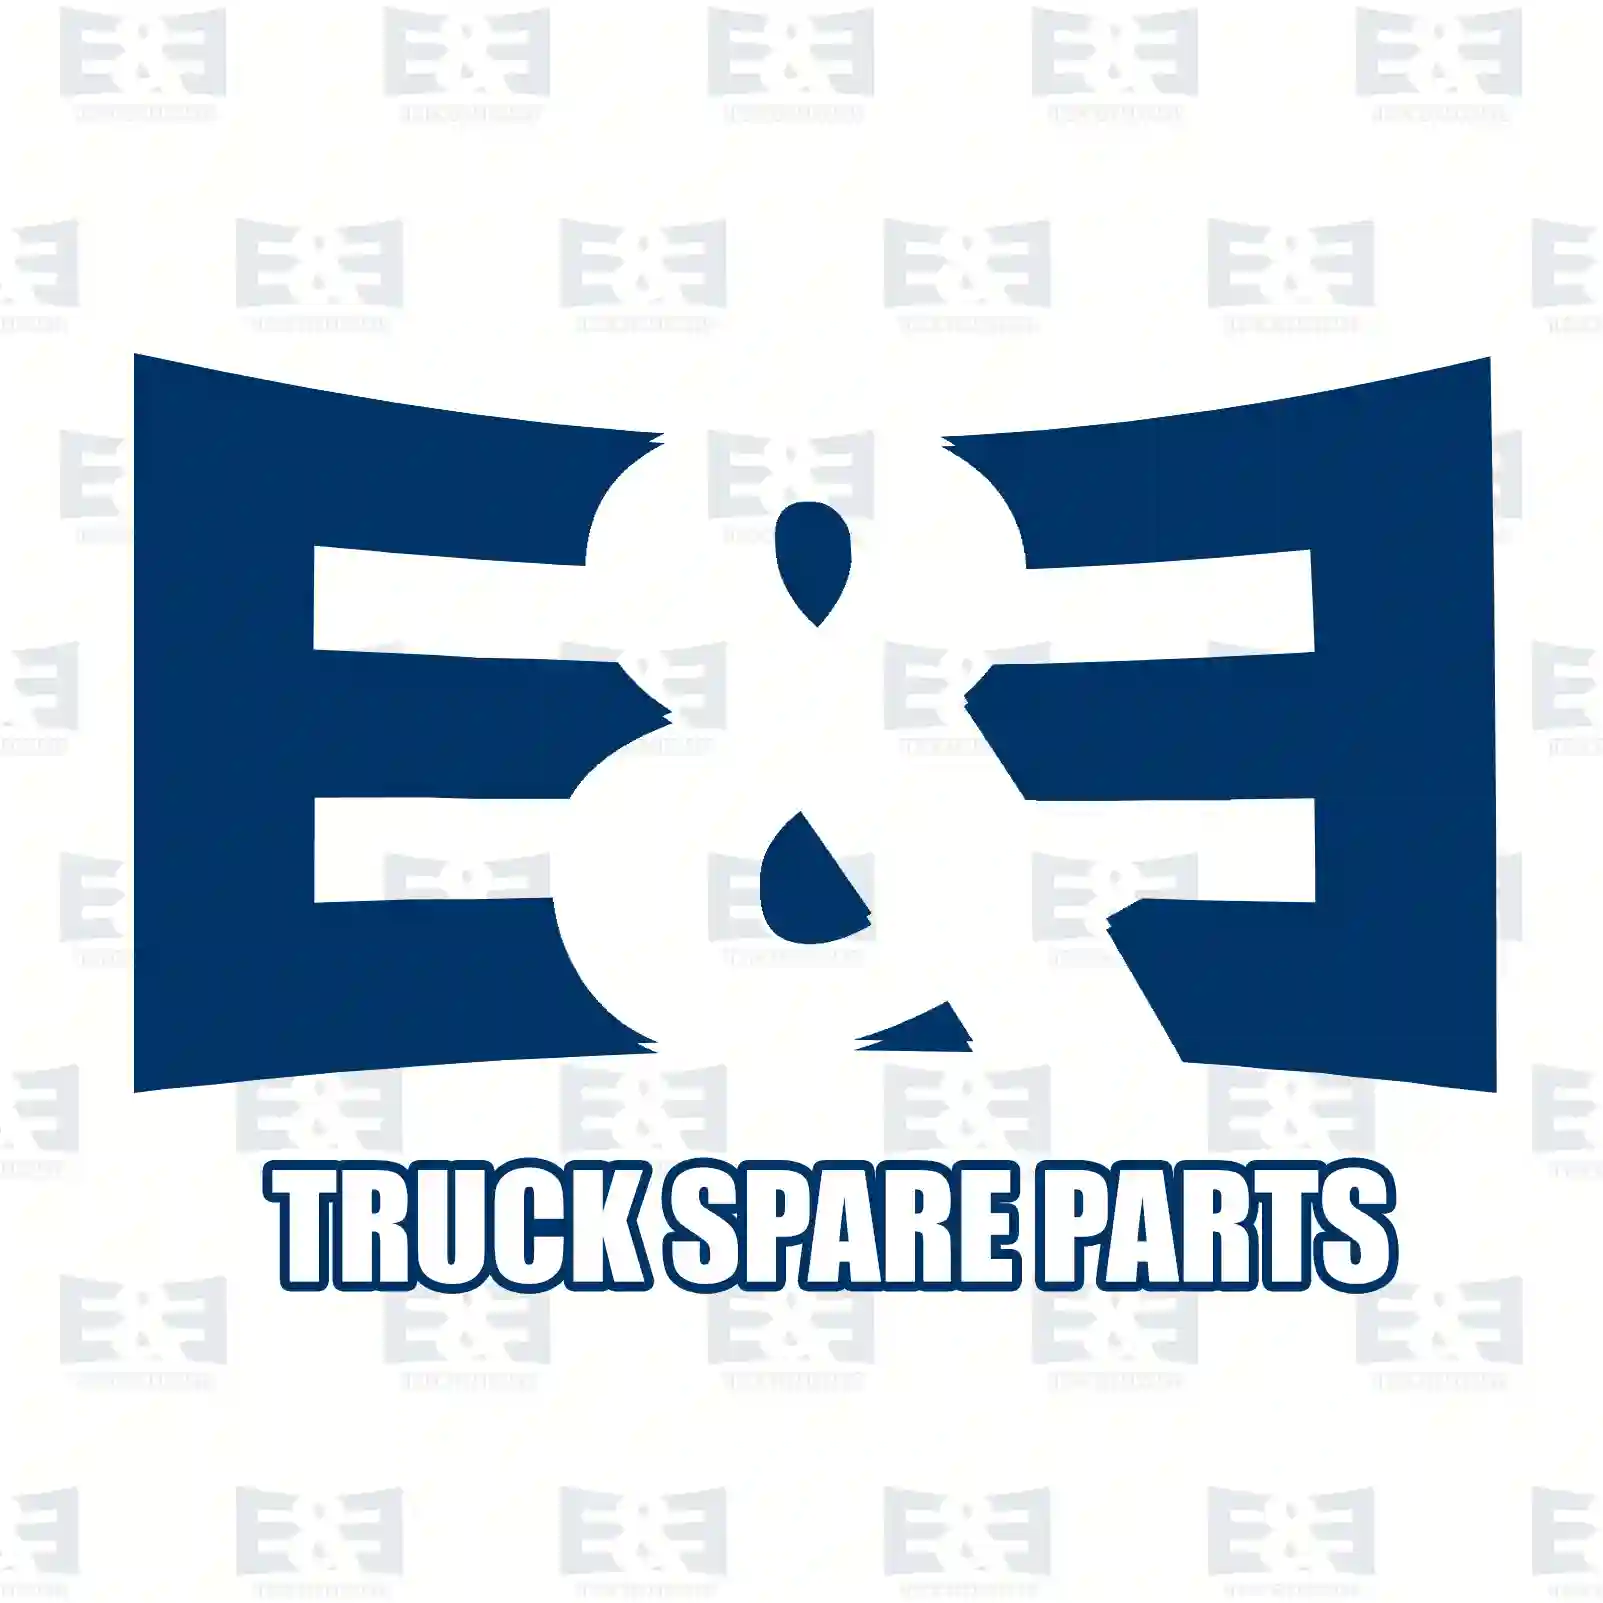 Ball caster, shifting valve, 2E2277837, 1295215, 81958010165, 5001842967, ZG40210-0008 ||  2E2277837 E&E Truck Spare Parts | Truck Spare Parts, Auotomotive Spare Parts Ball caster, shifting valve, 2E2277837, 1295215, 81958010165, 5001842967, ZG40210-0008 ||  2E2277837 E&E Truck Spare Parts | Truck Spare Parts, Auotomotive Spare Parts